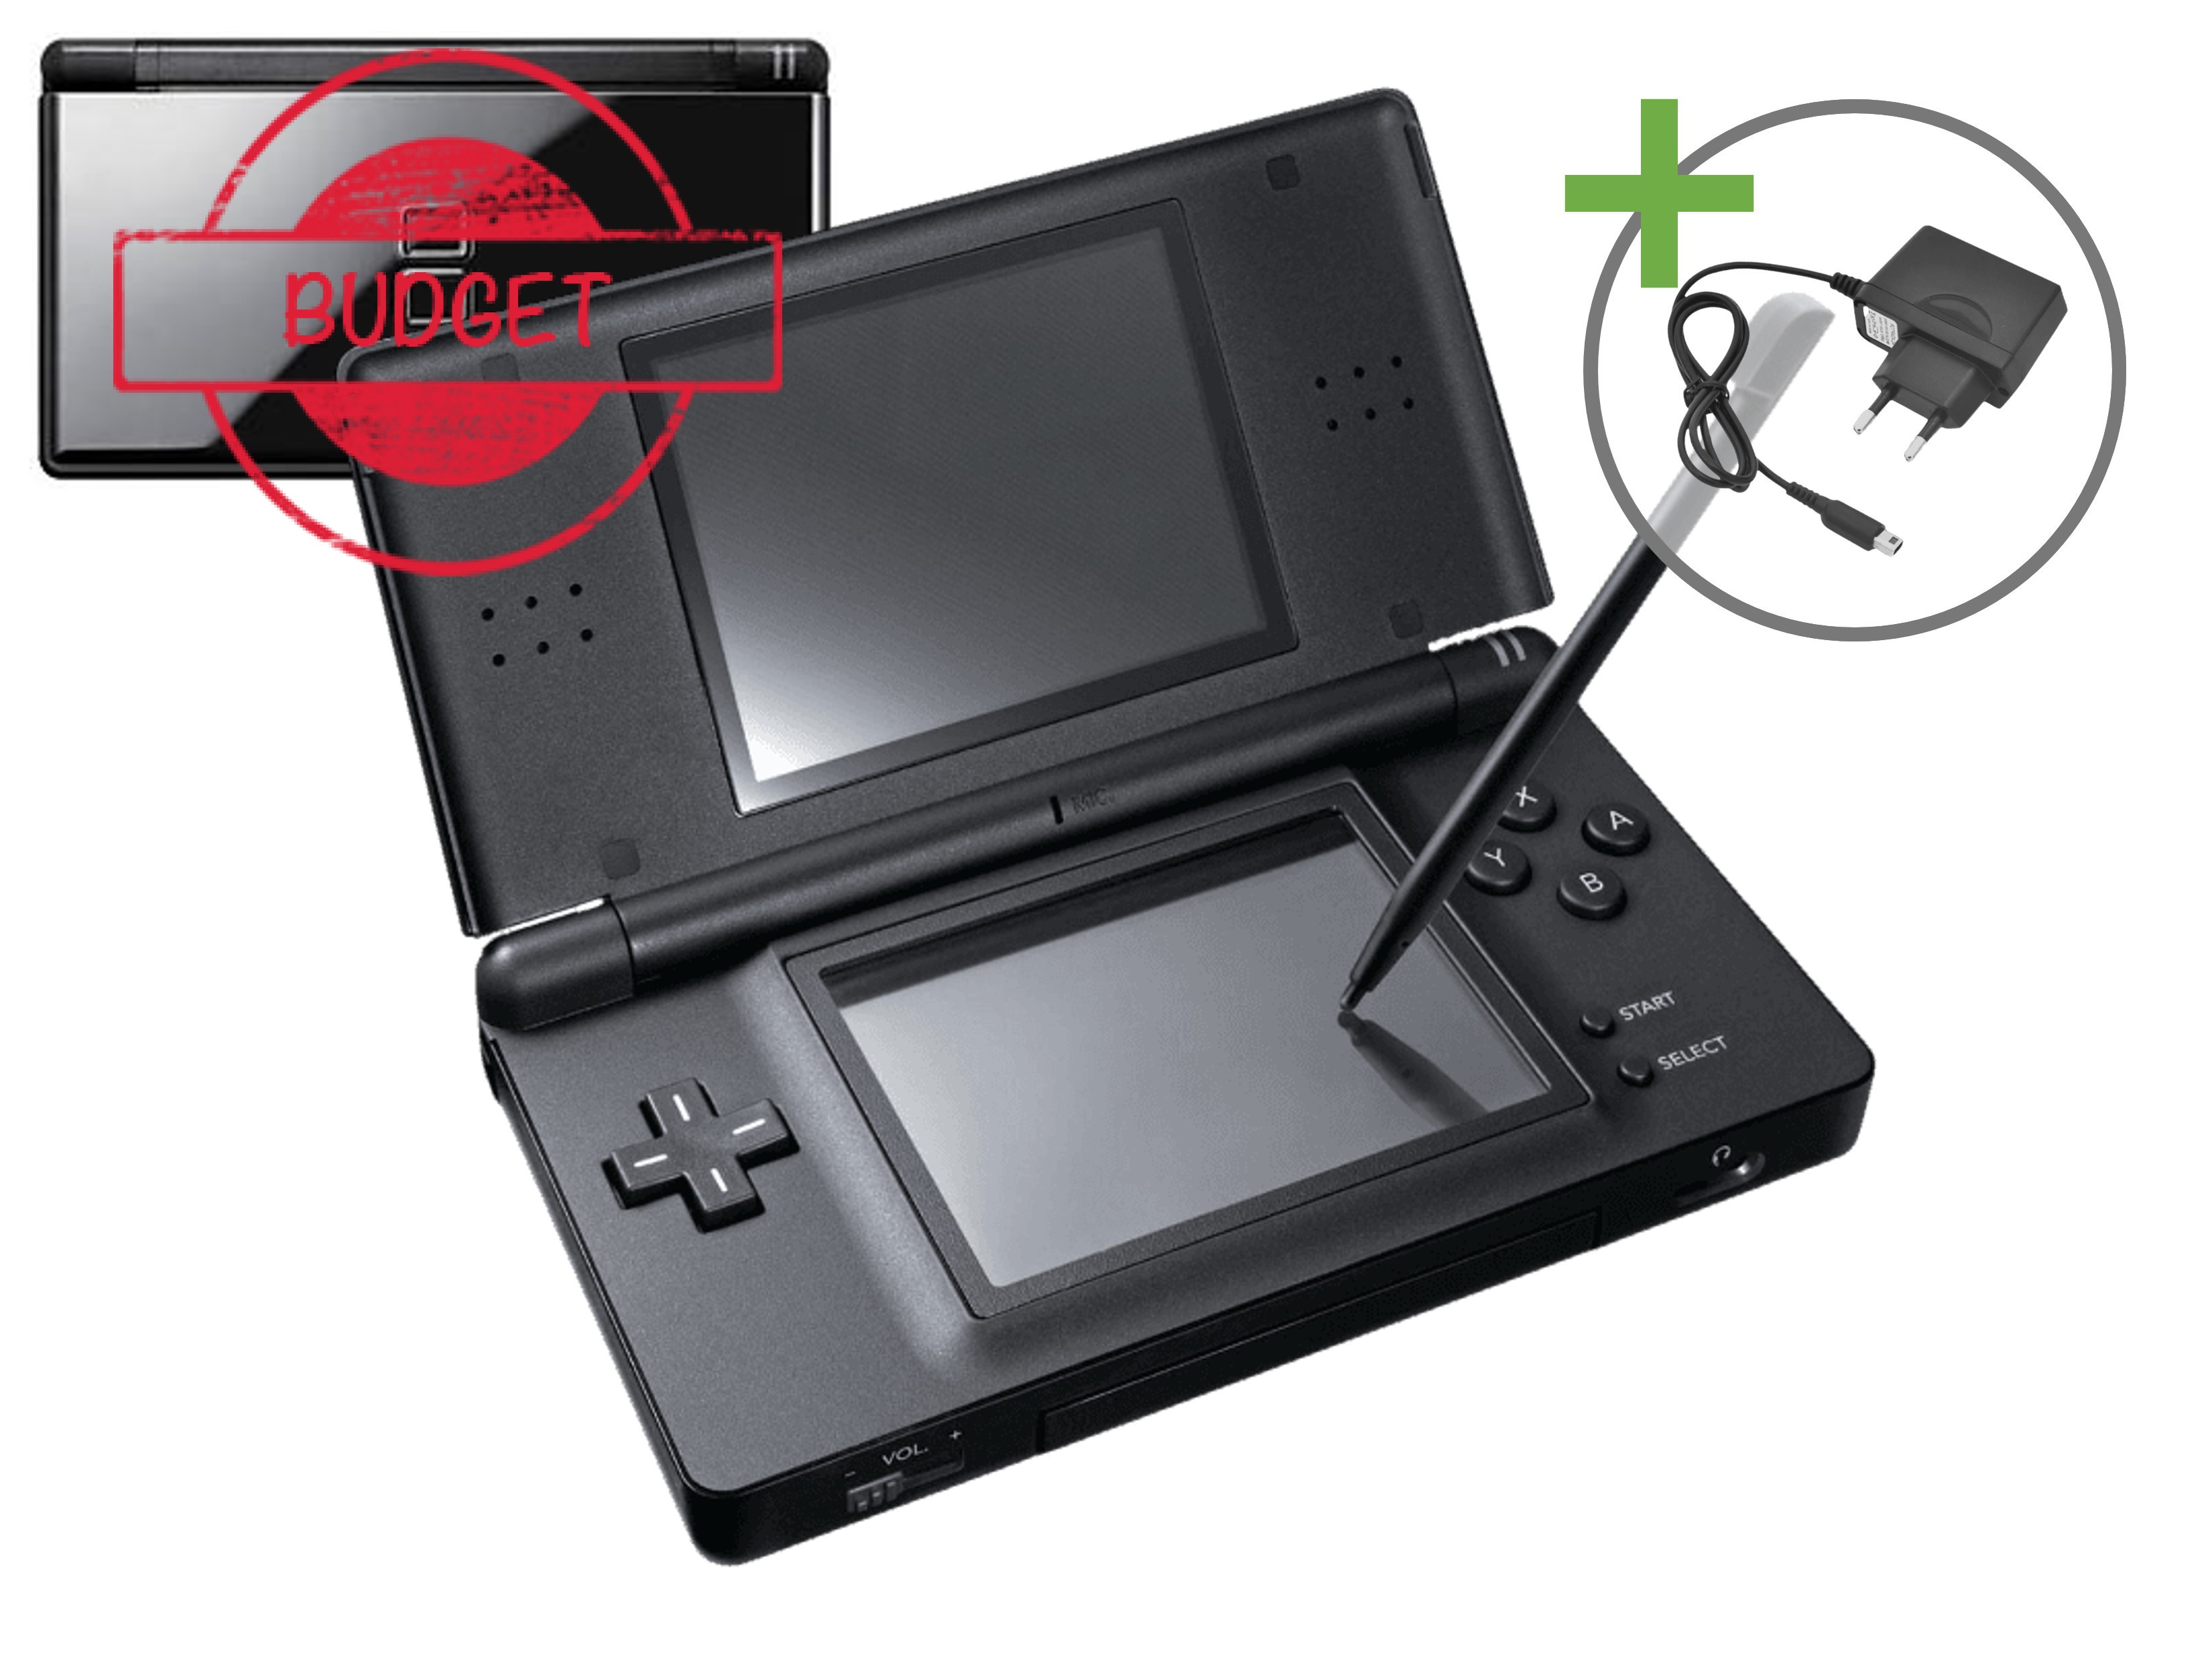 Nintendo DS Lite - Black (Cobalt) - Budget - Nintendo DS Hardware